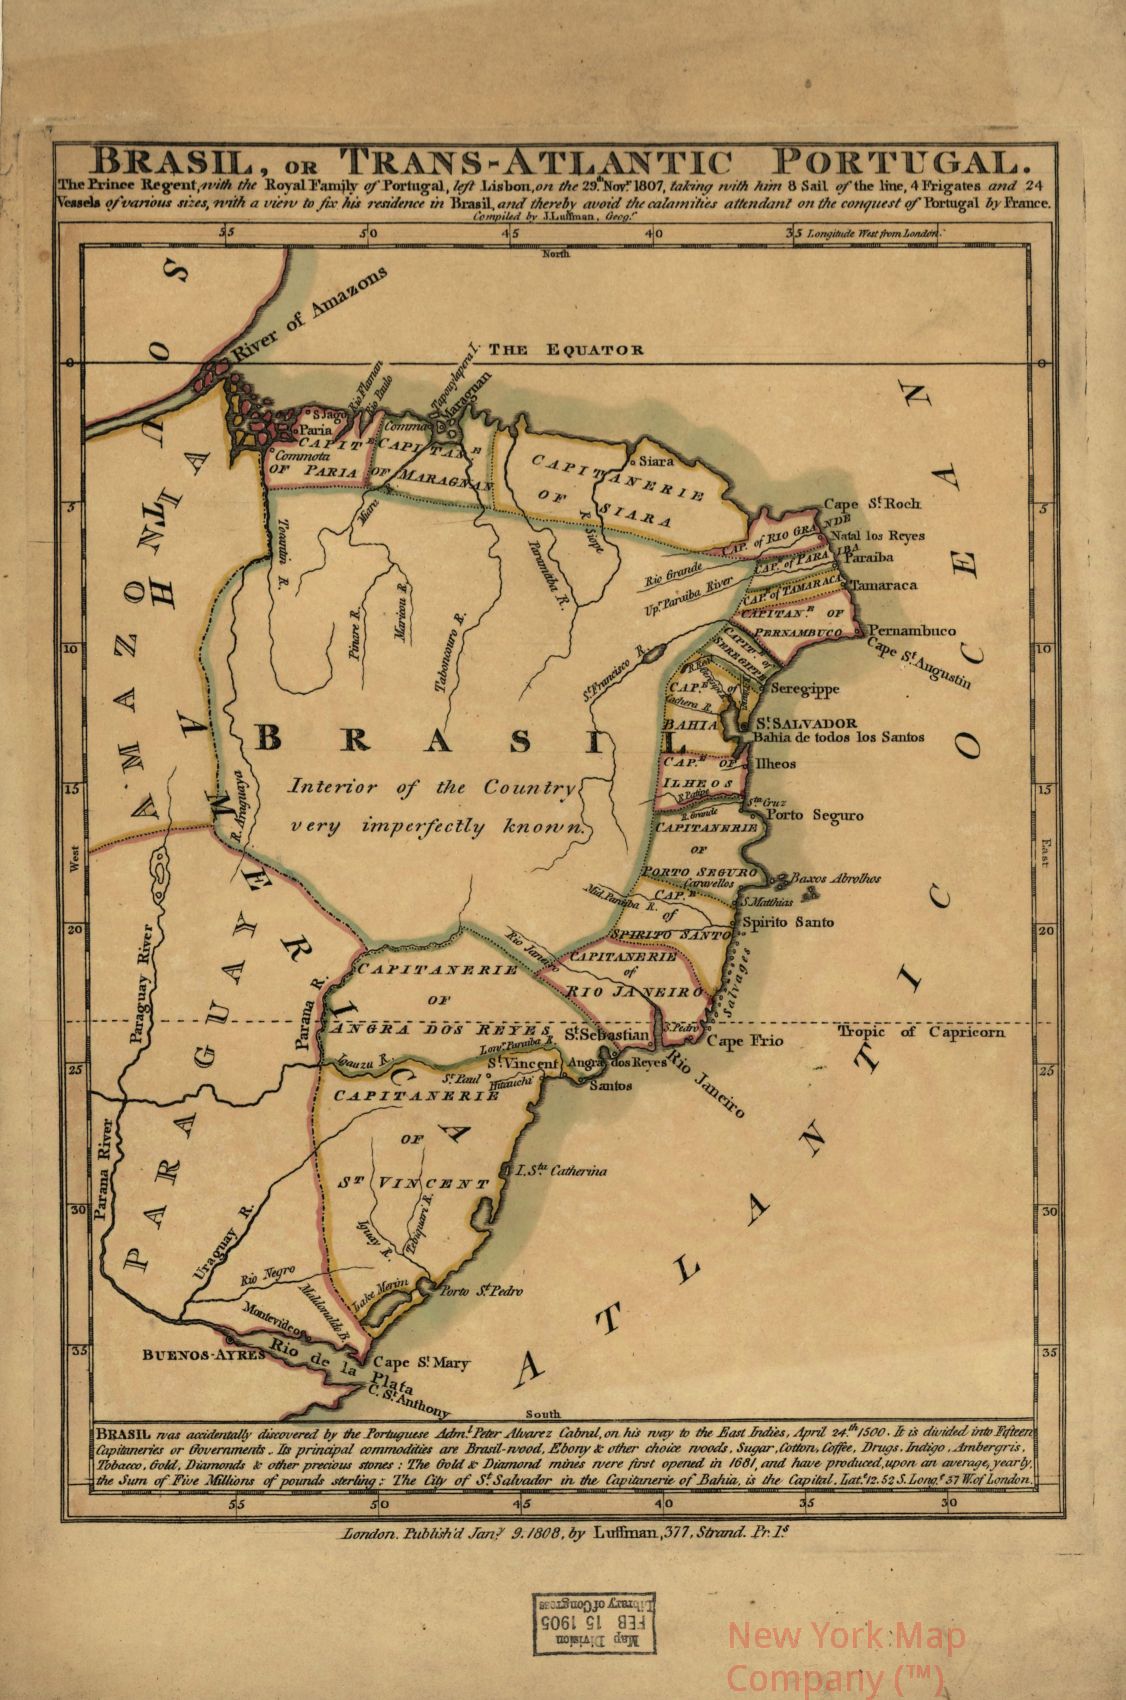 1808 map Brazil, or trans-Atlantic Portugal. Map Subjects: Brazil